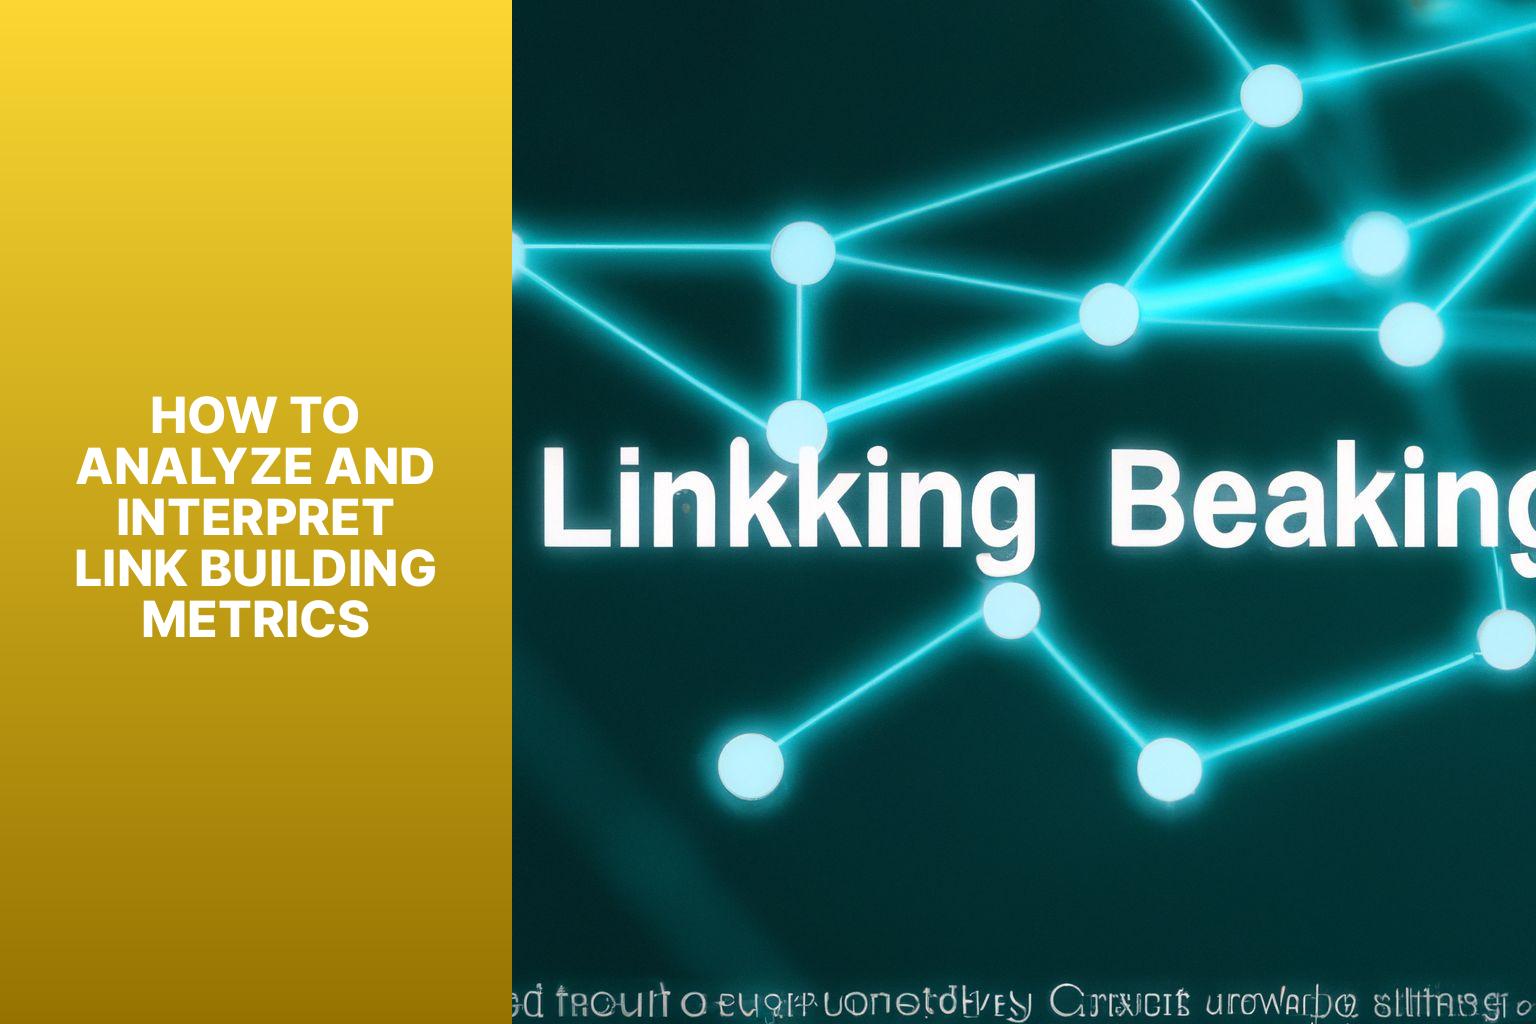 How to Analyze and Interpret Link Building Metrics - Link Building Metrics Every SEO Pro Should Monitor 